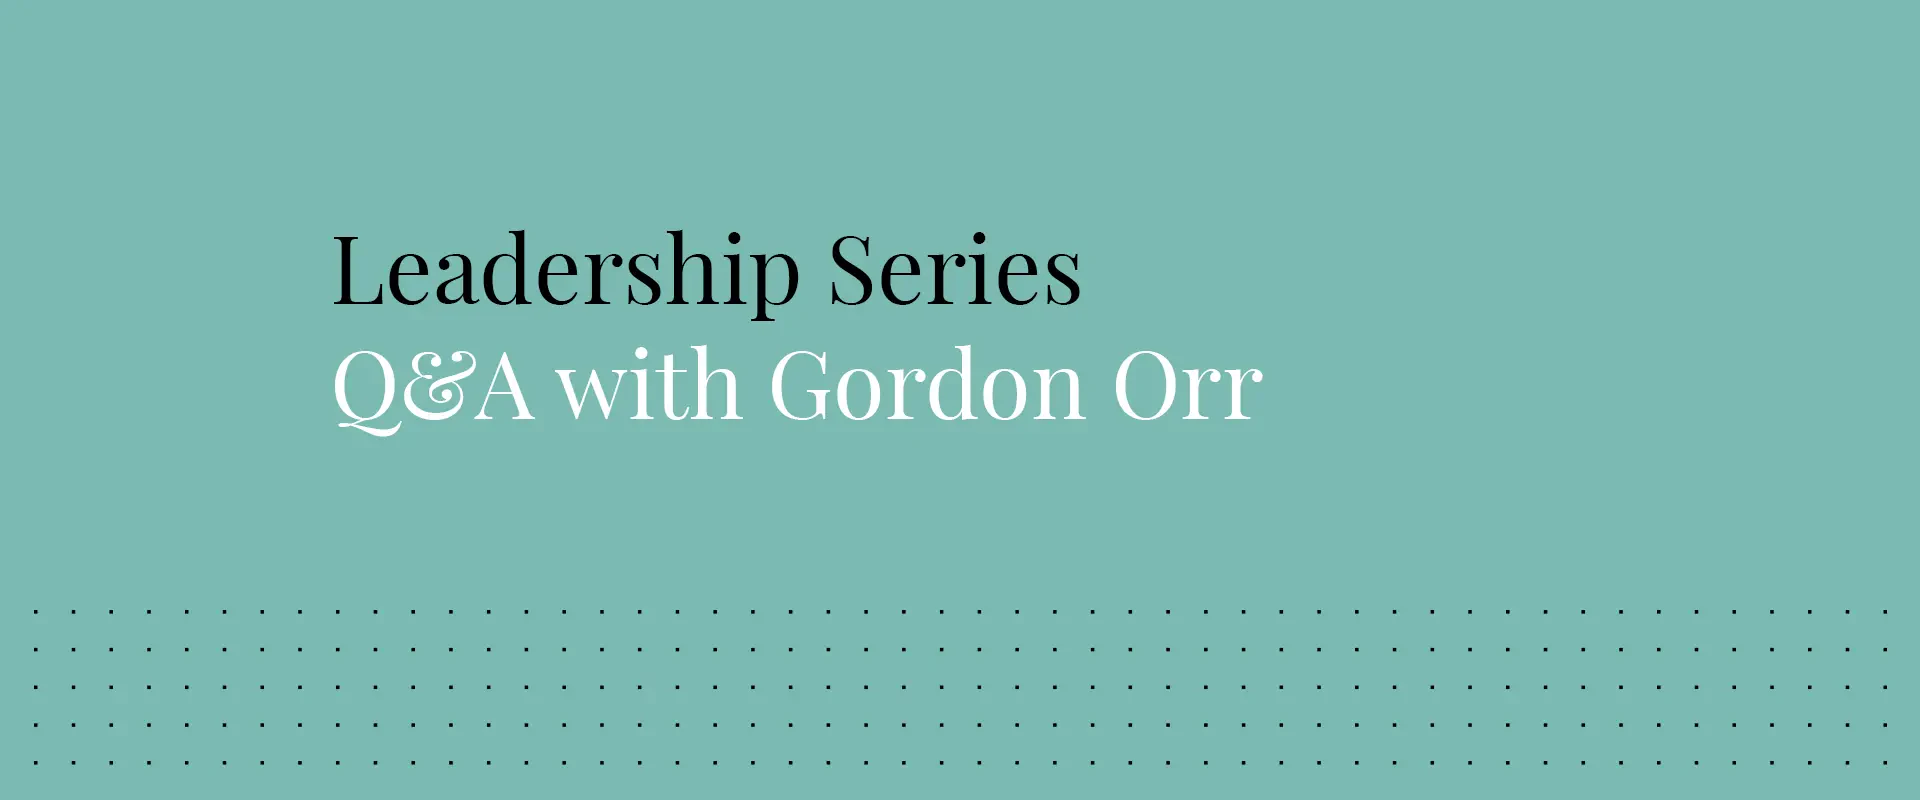 Morrow Sodali Leadership Series - The Modern Board of Directors